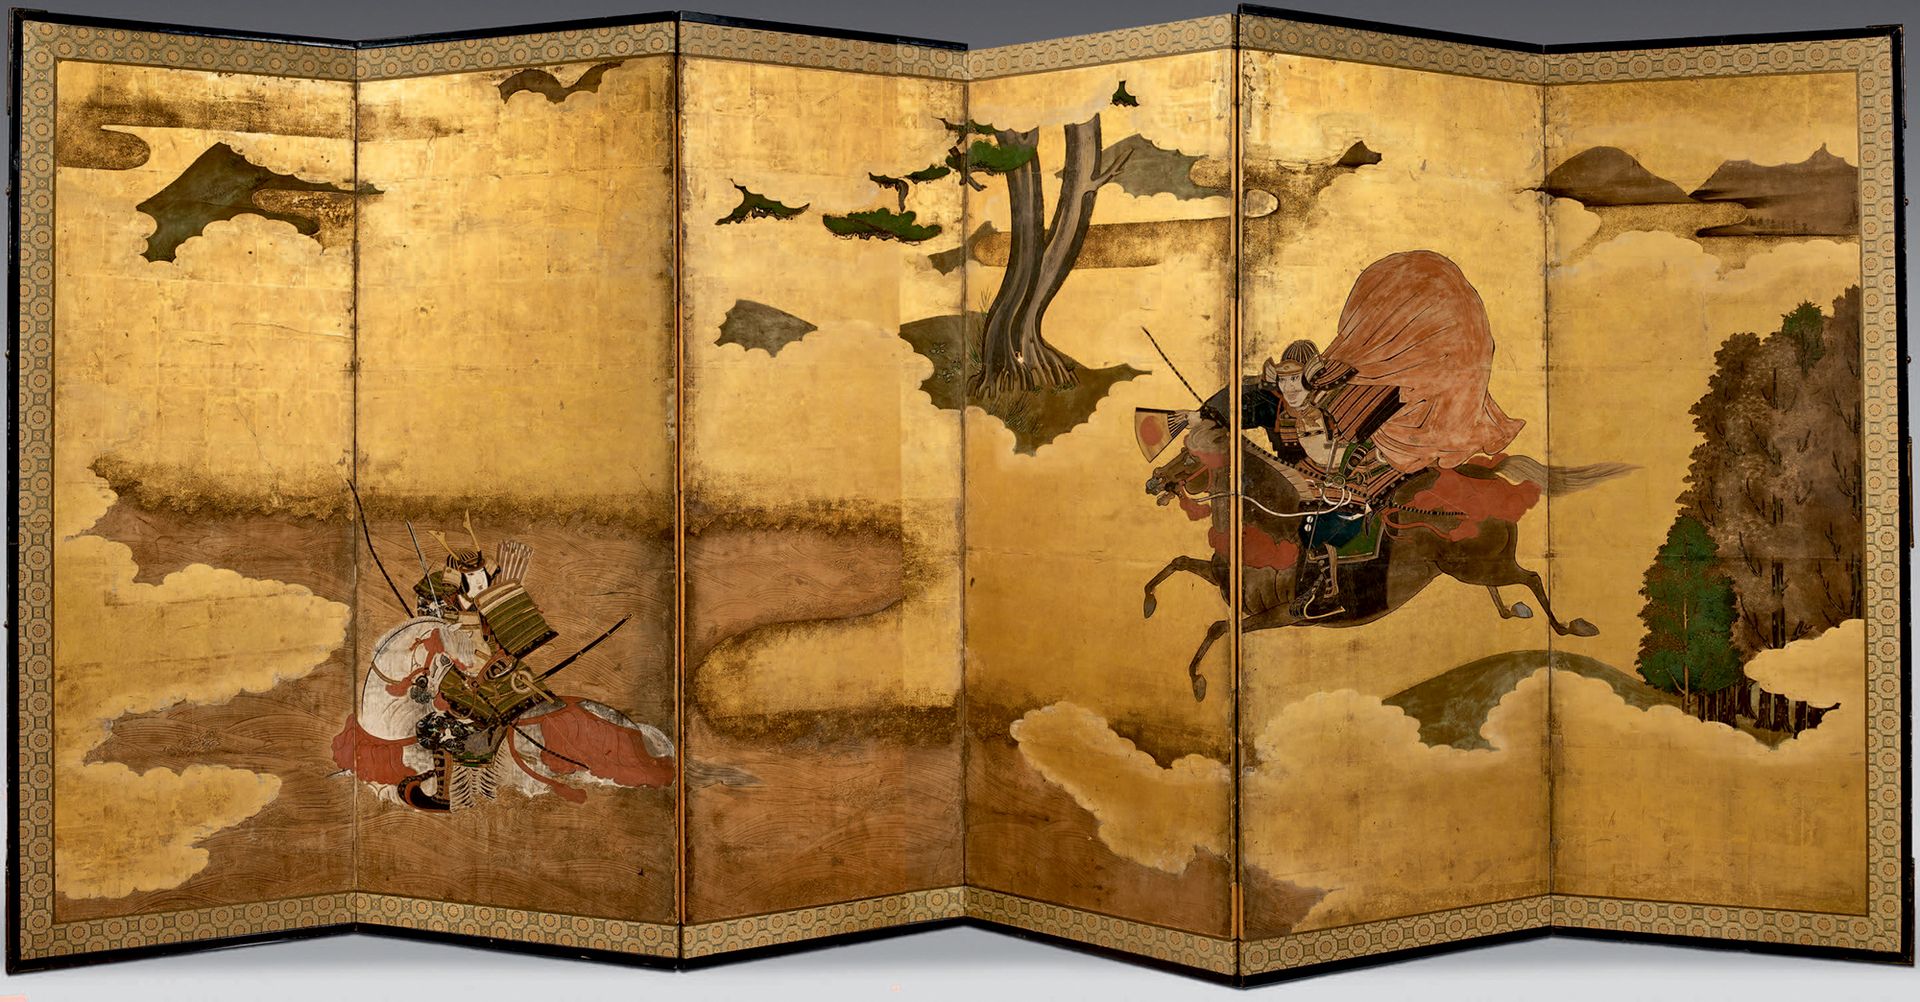 JAPON - Époque Edo (1603-1868), XVIIIe siècle Biombo de seis hojas, escena del H&hellip;